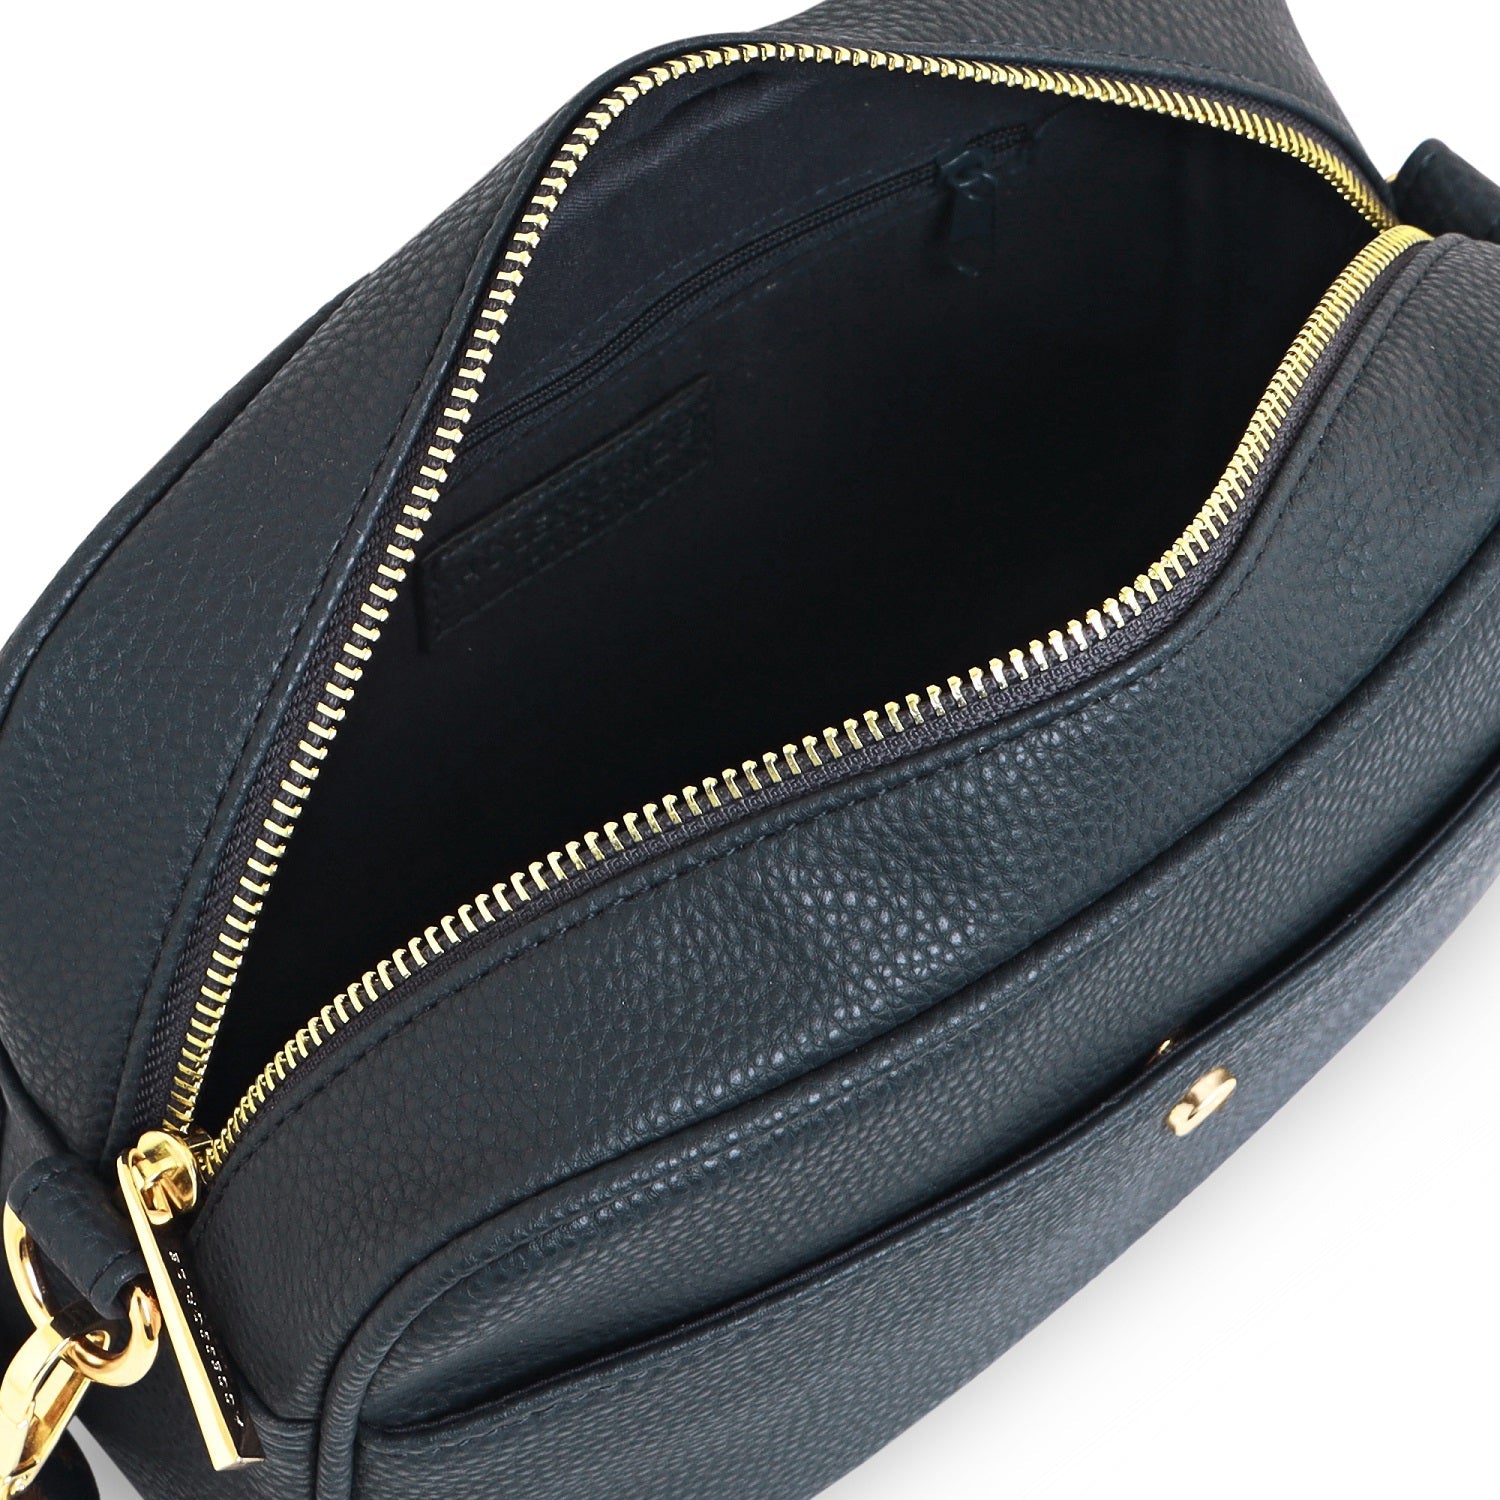 Accessorize London Women's Faux Leather Navy Leopard strap camera Sling bag